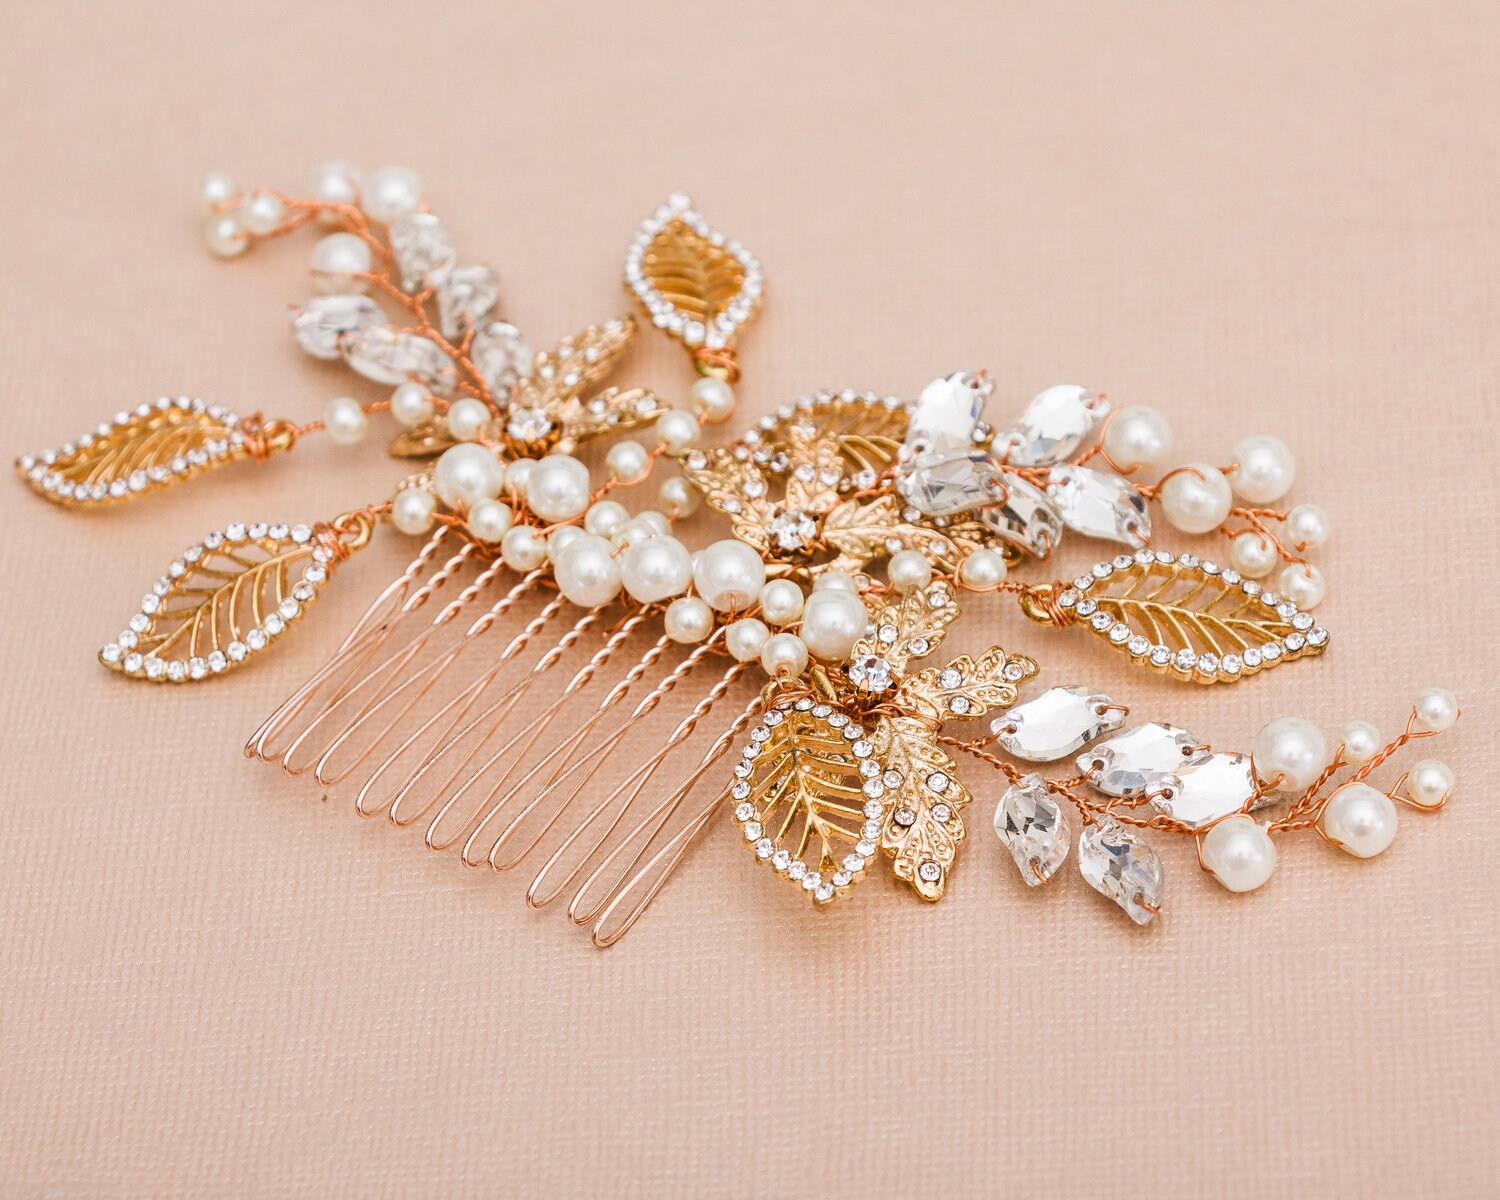 Rose Gold Bridal Hair Accessories Wedding Hair Accessories | Etsy